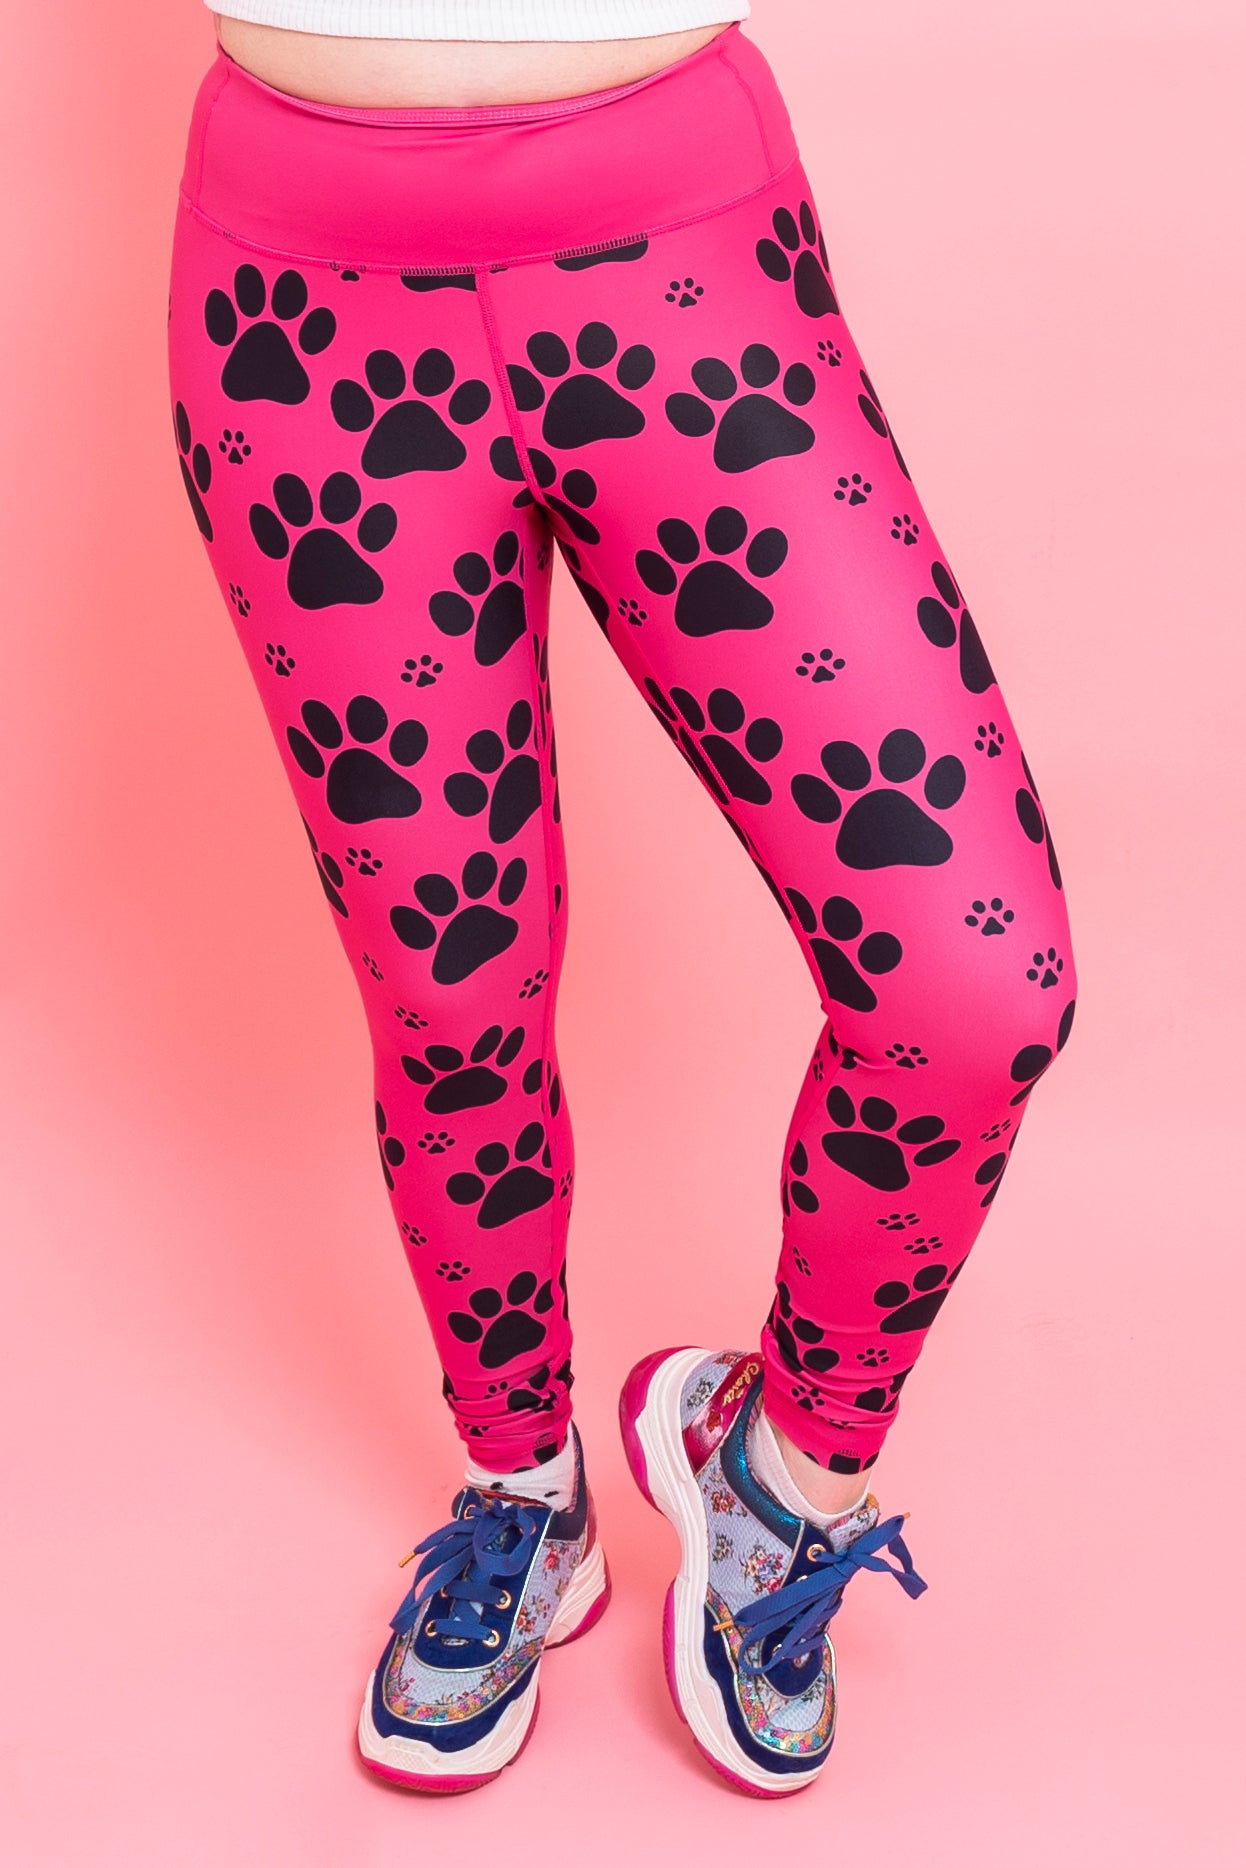 Pink Paw Print Women's Activewear Leggings - Tall 33” inside leg